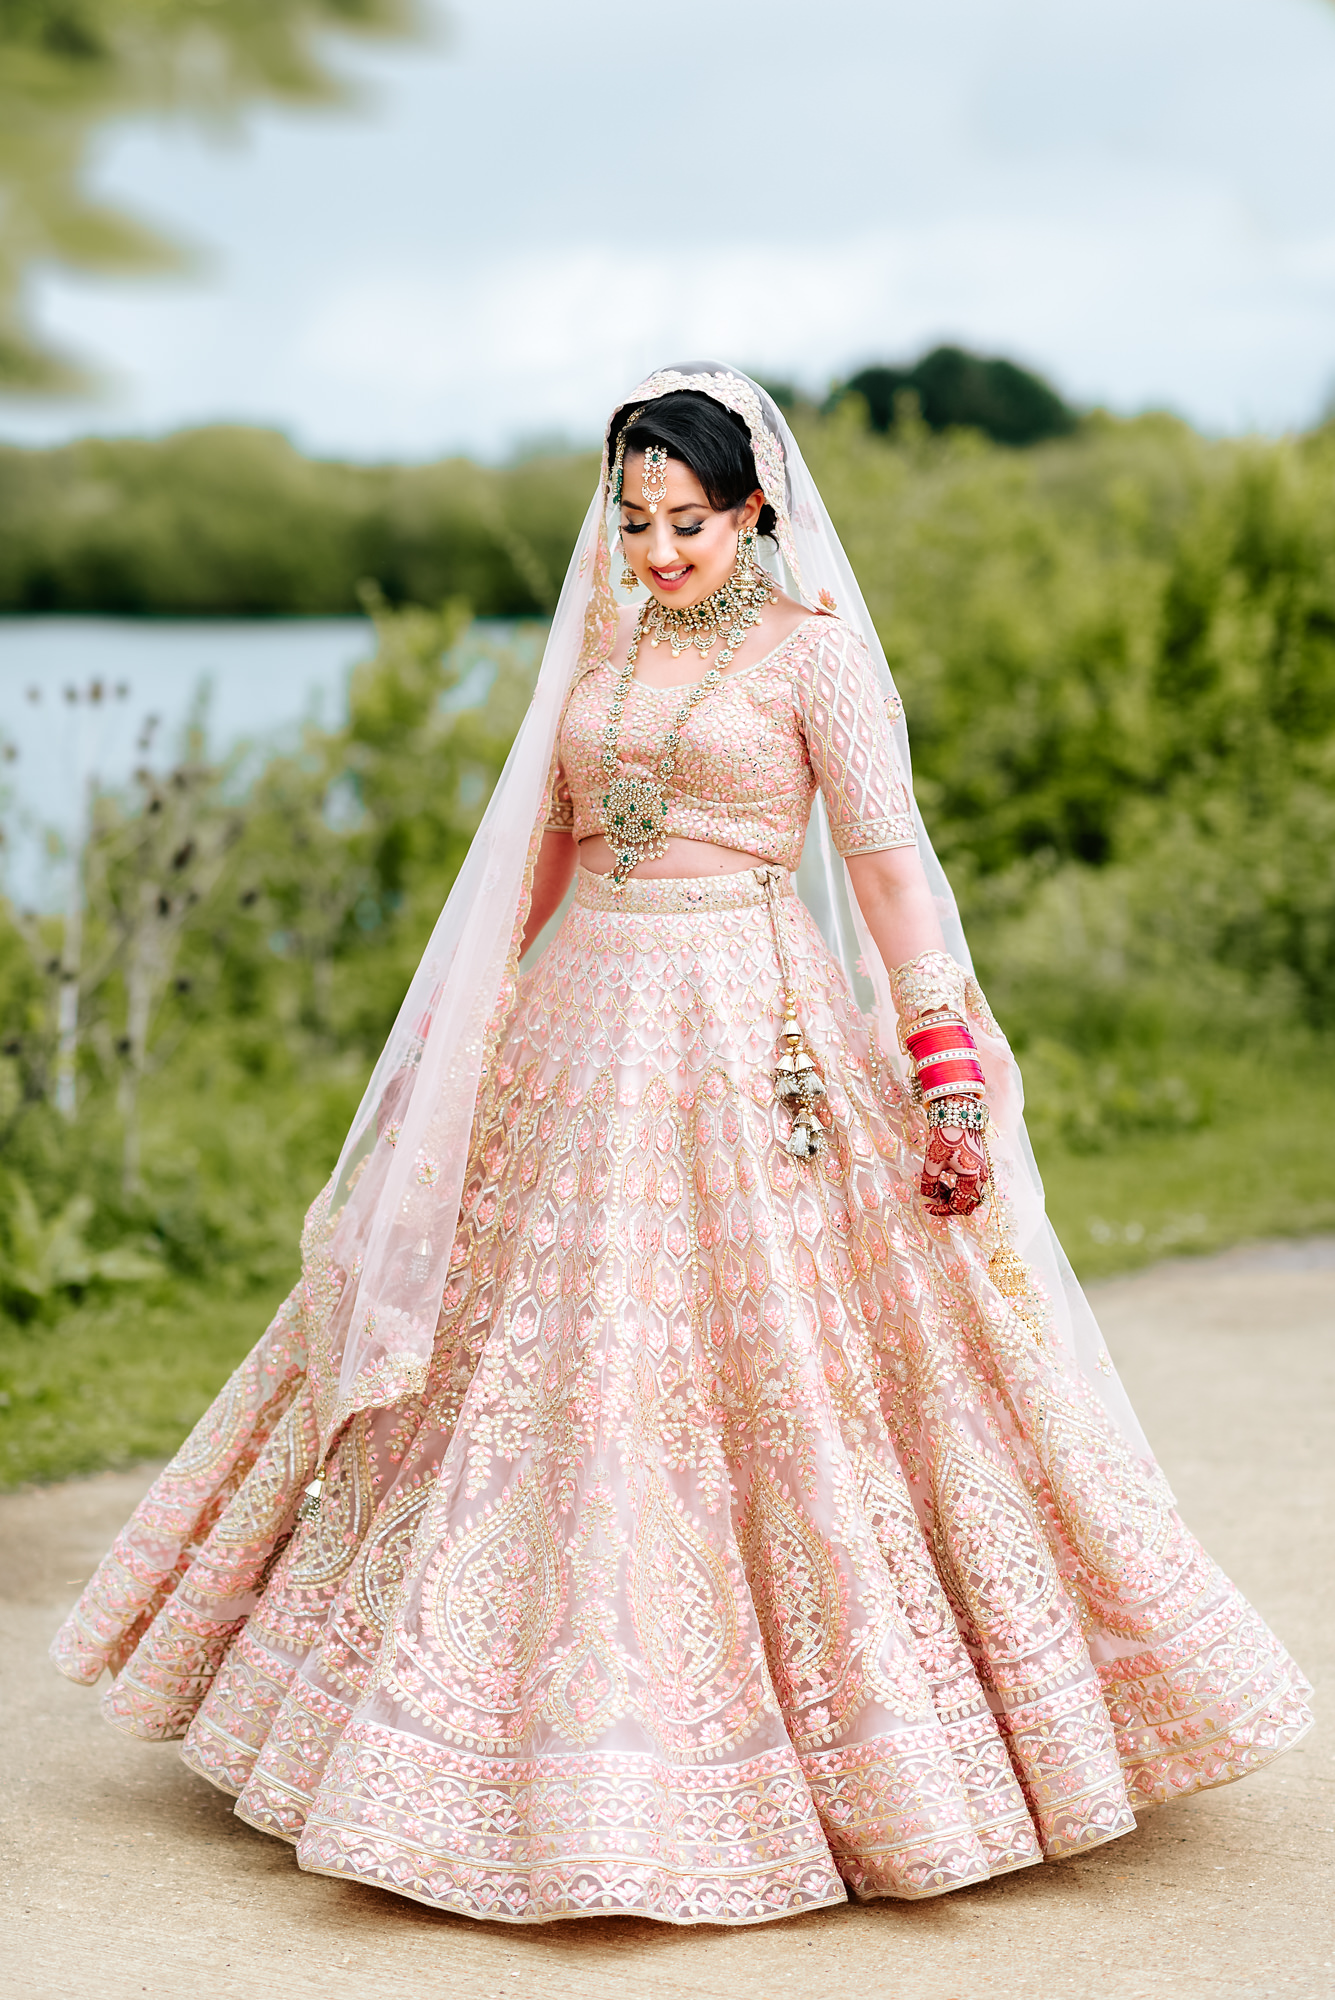 stunning Sikh bride